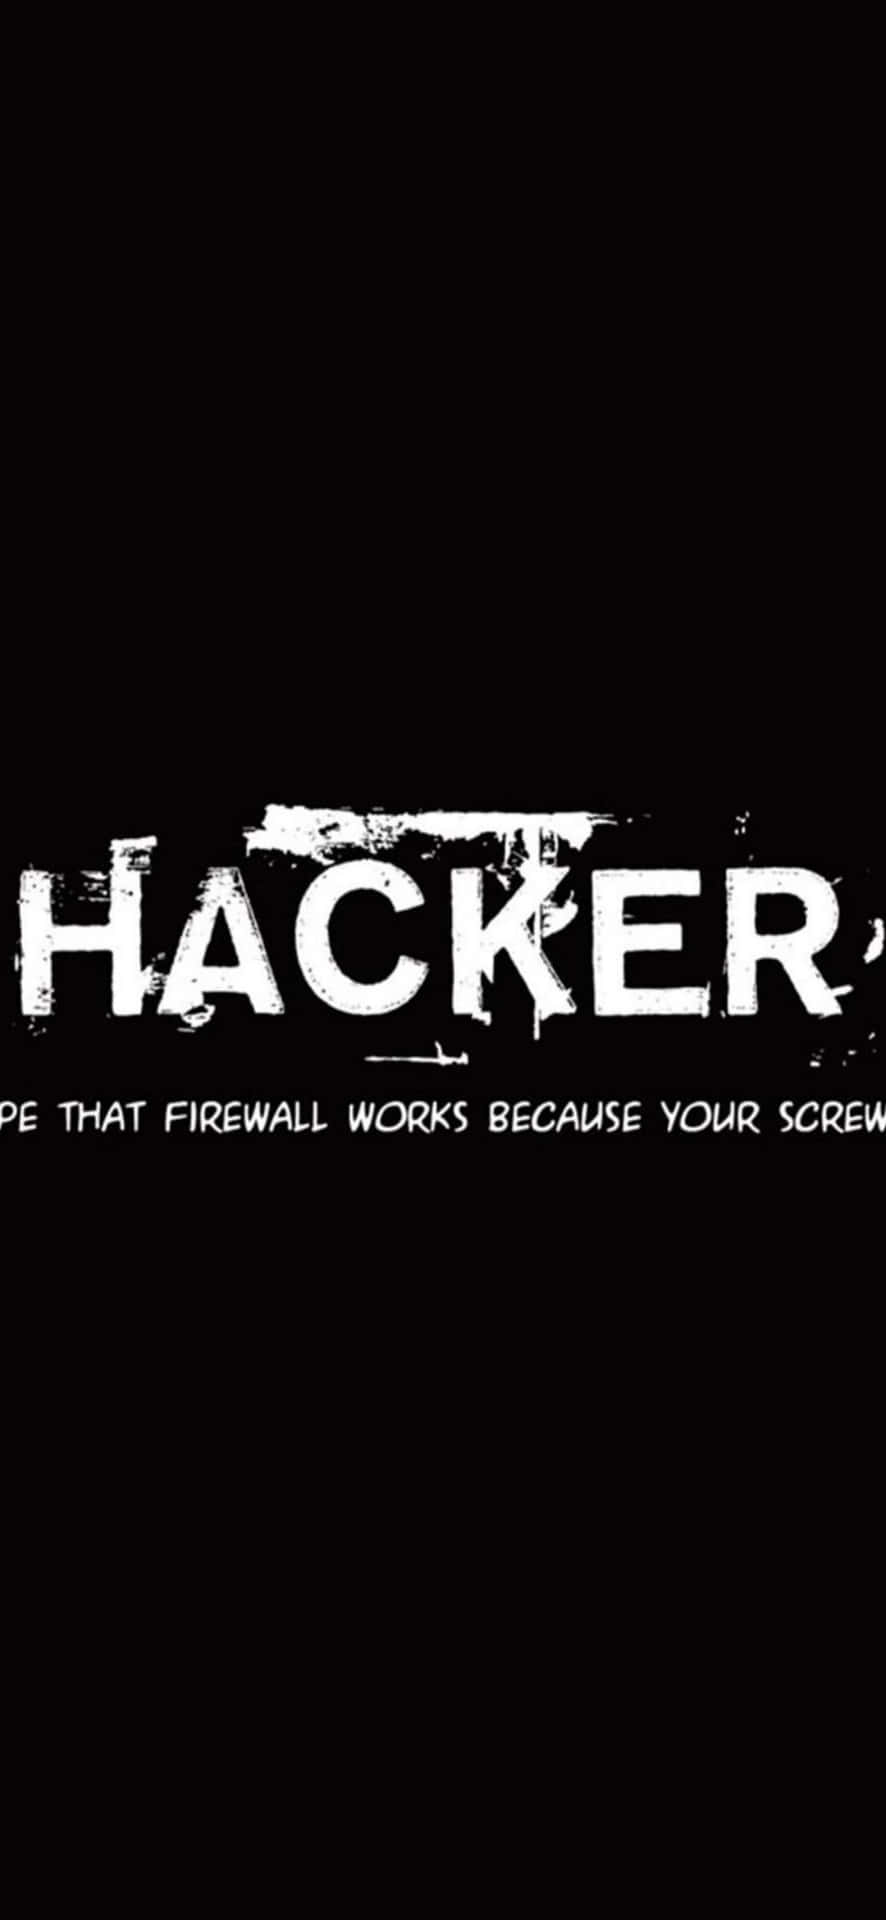 Hacker Firewall Warning Graphic Wallpaper